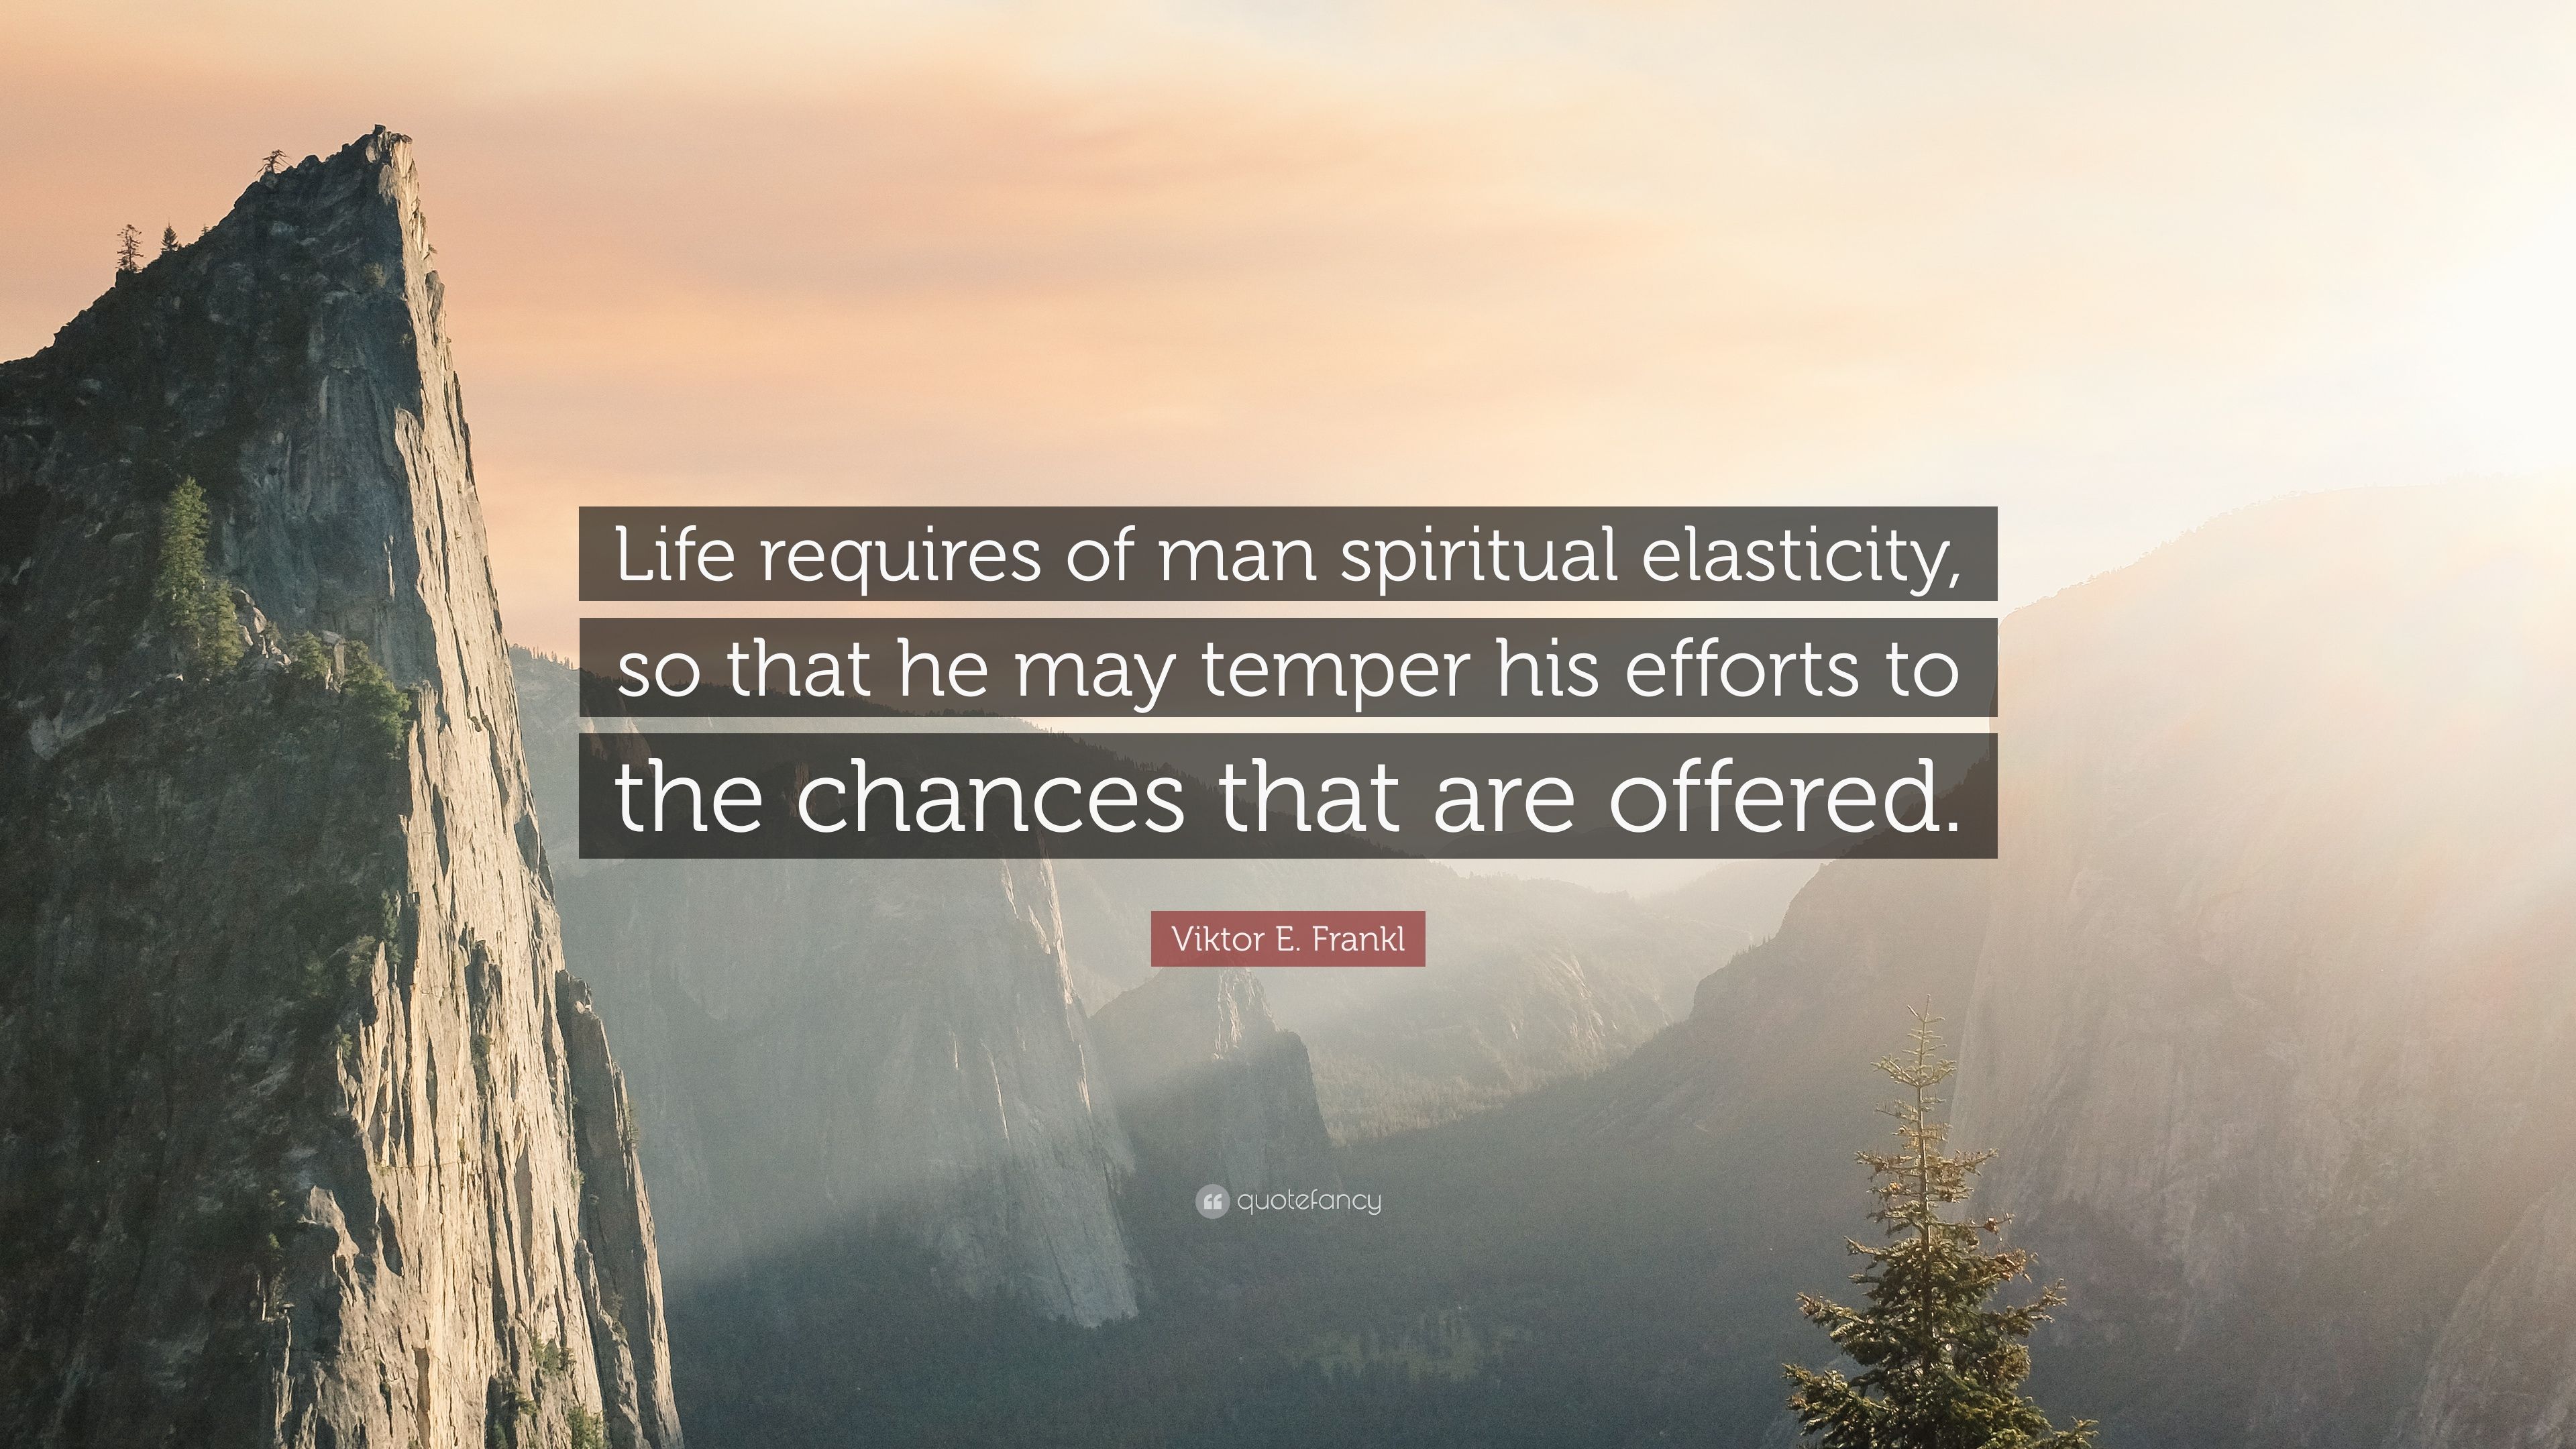 Viktor E. Frankl Quote: “Life requires of man spiritual elasticity